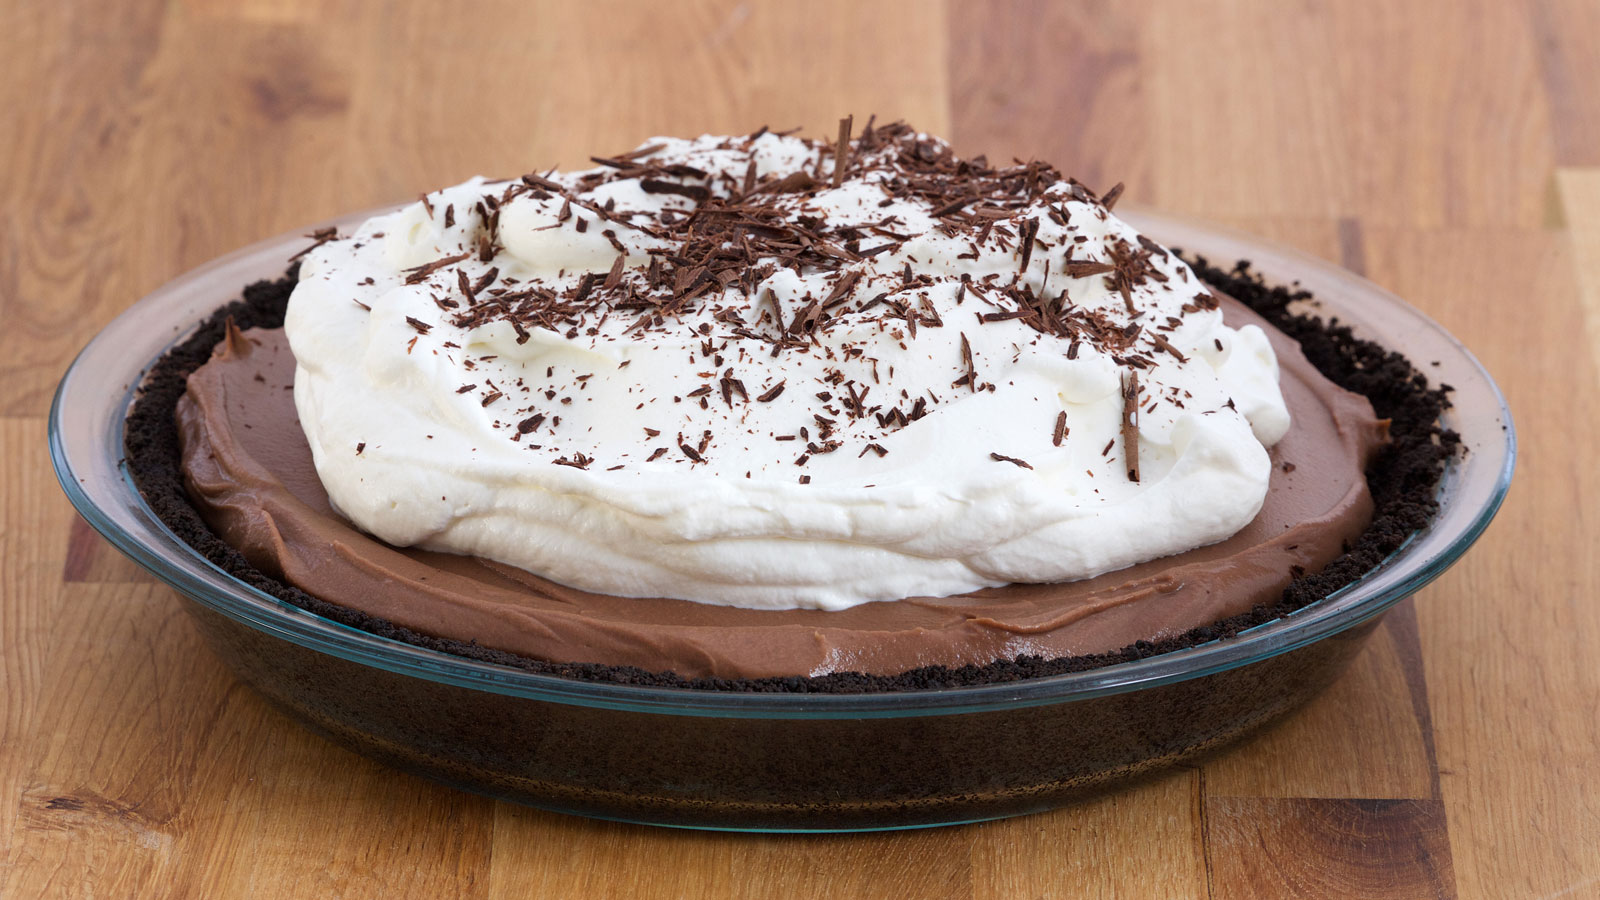 Tarta de nata y chocolate (Chocolate Cream Pie) - Anna Olson - Receta -  Canal Cocina